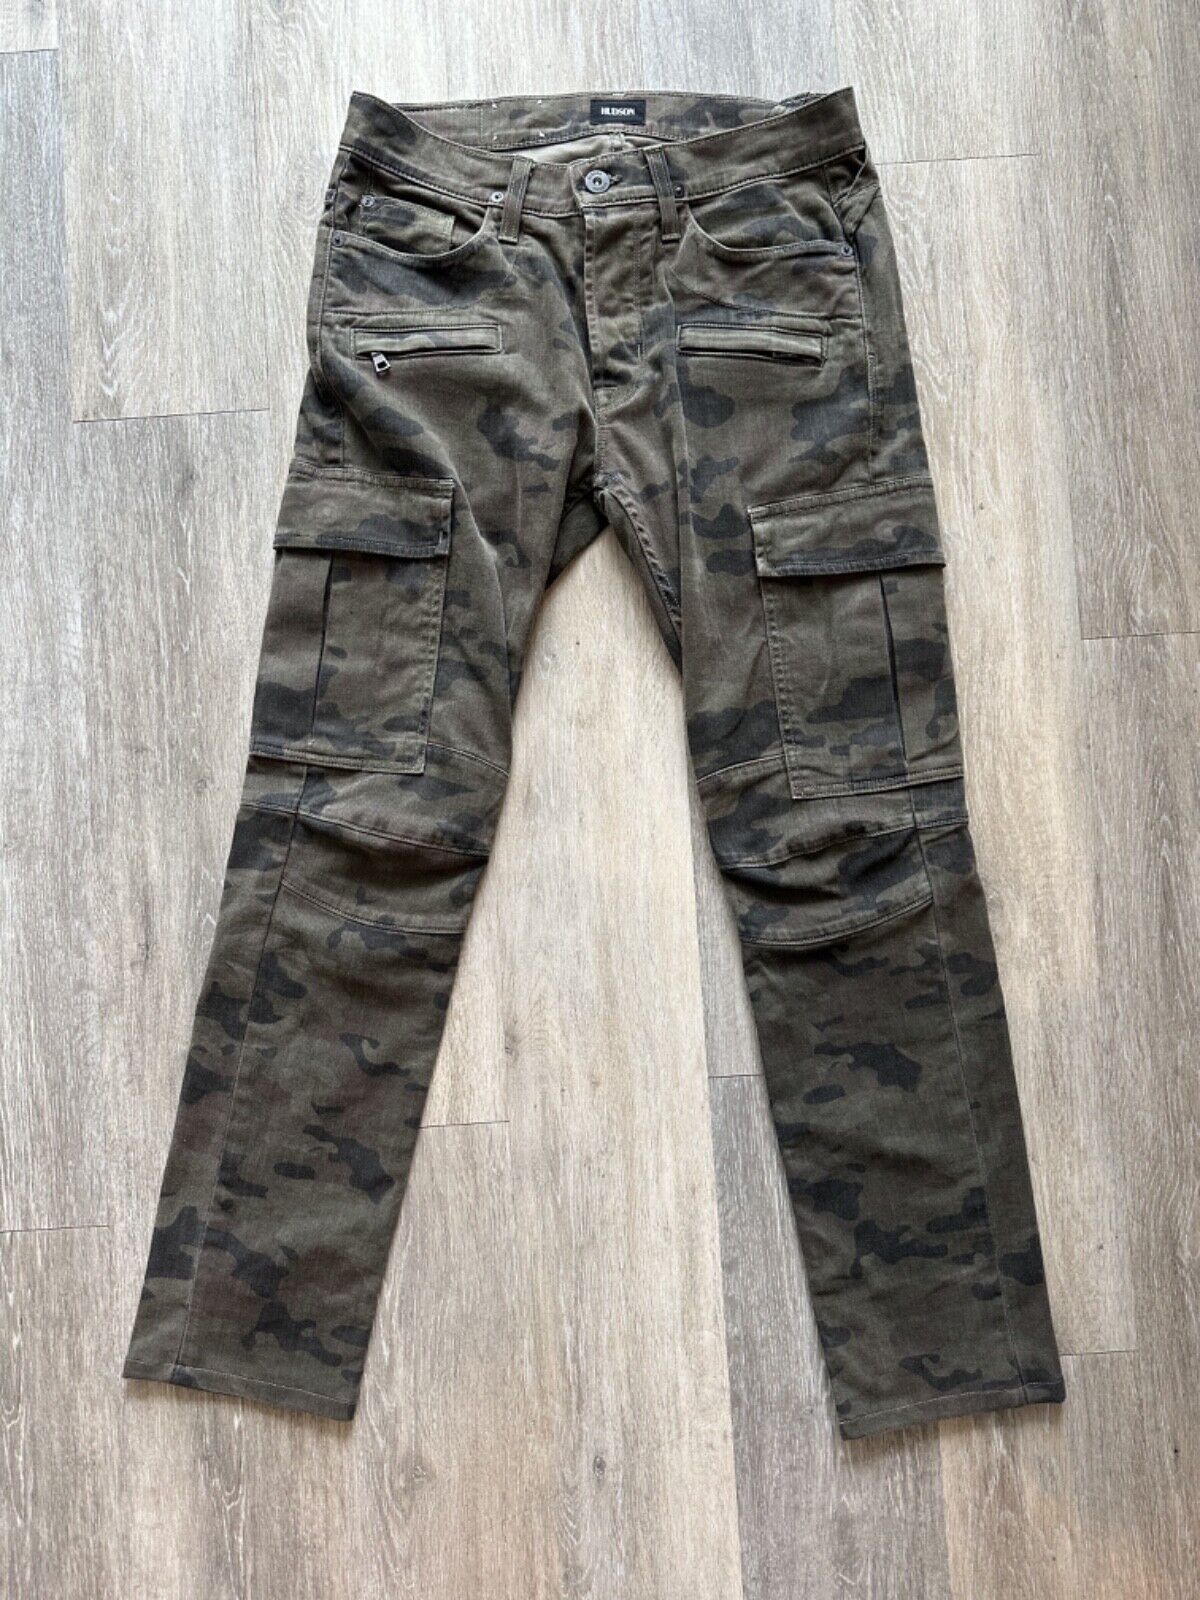 HUDSON Men\'s Greyson Slim Military Cargo Biker Jeans Camo - Size 30